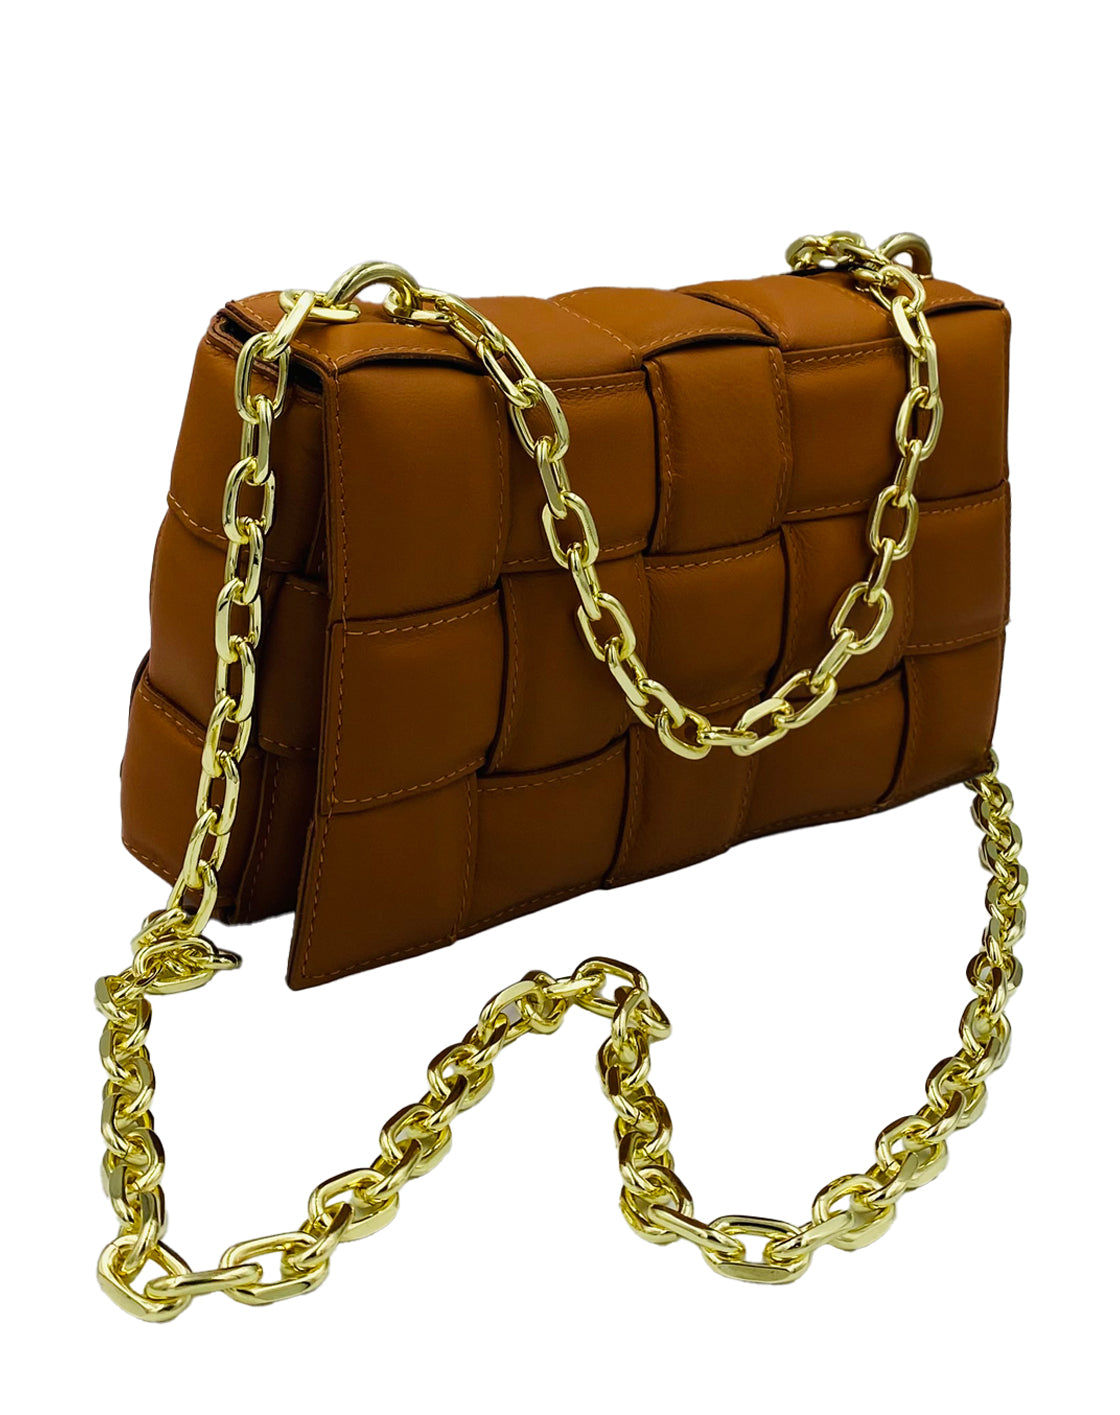 Braided Leather Handbag Camel